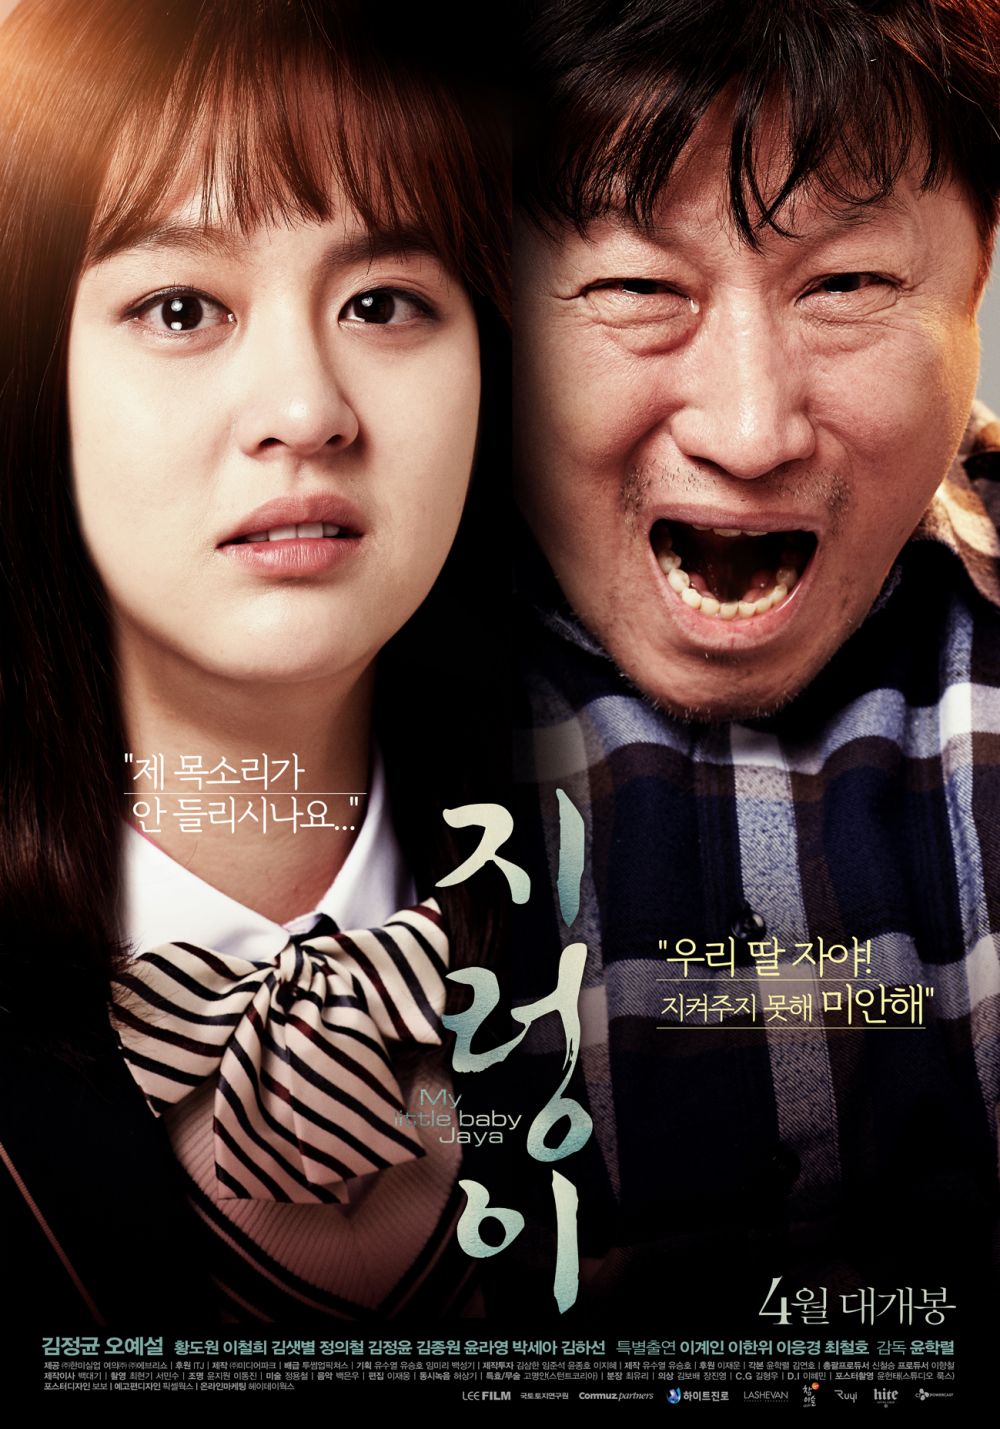 11 Film dan drama Korea kenakalan remaja, lebih peduli isu di sekolah